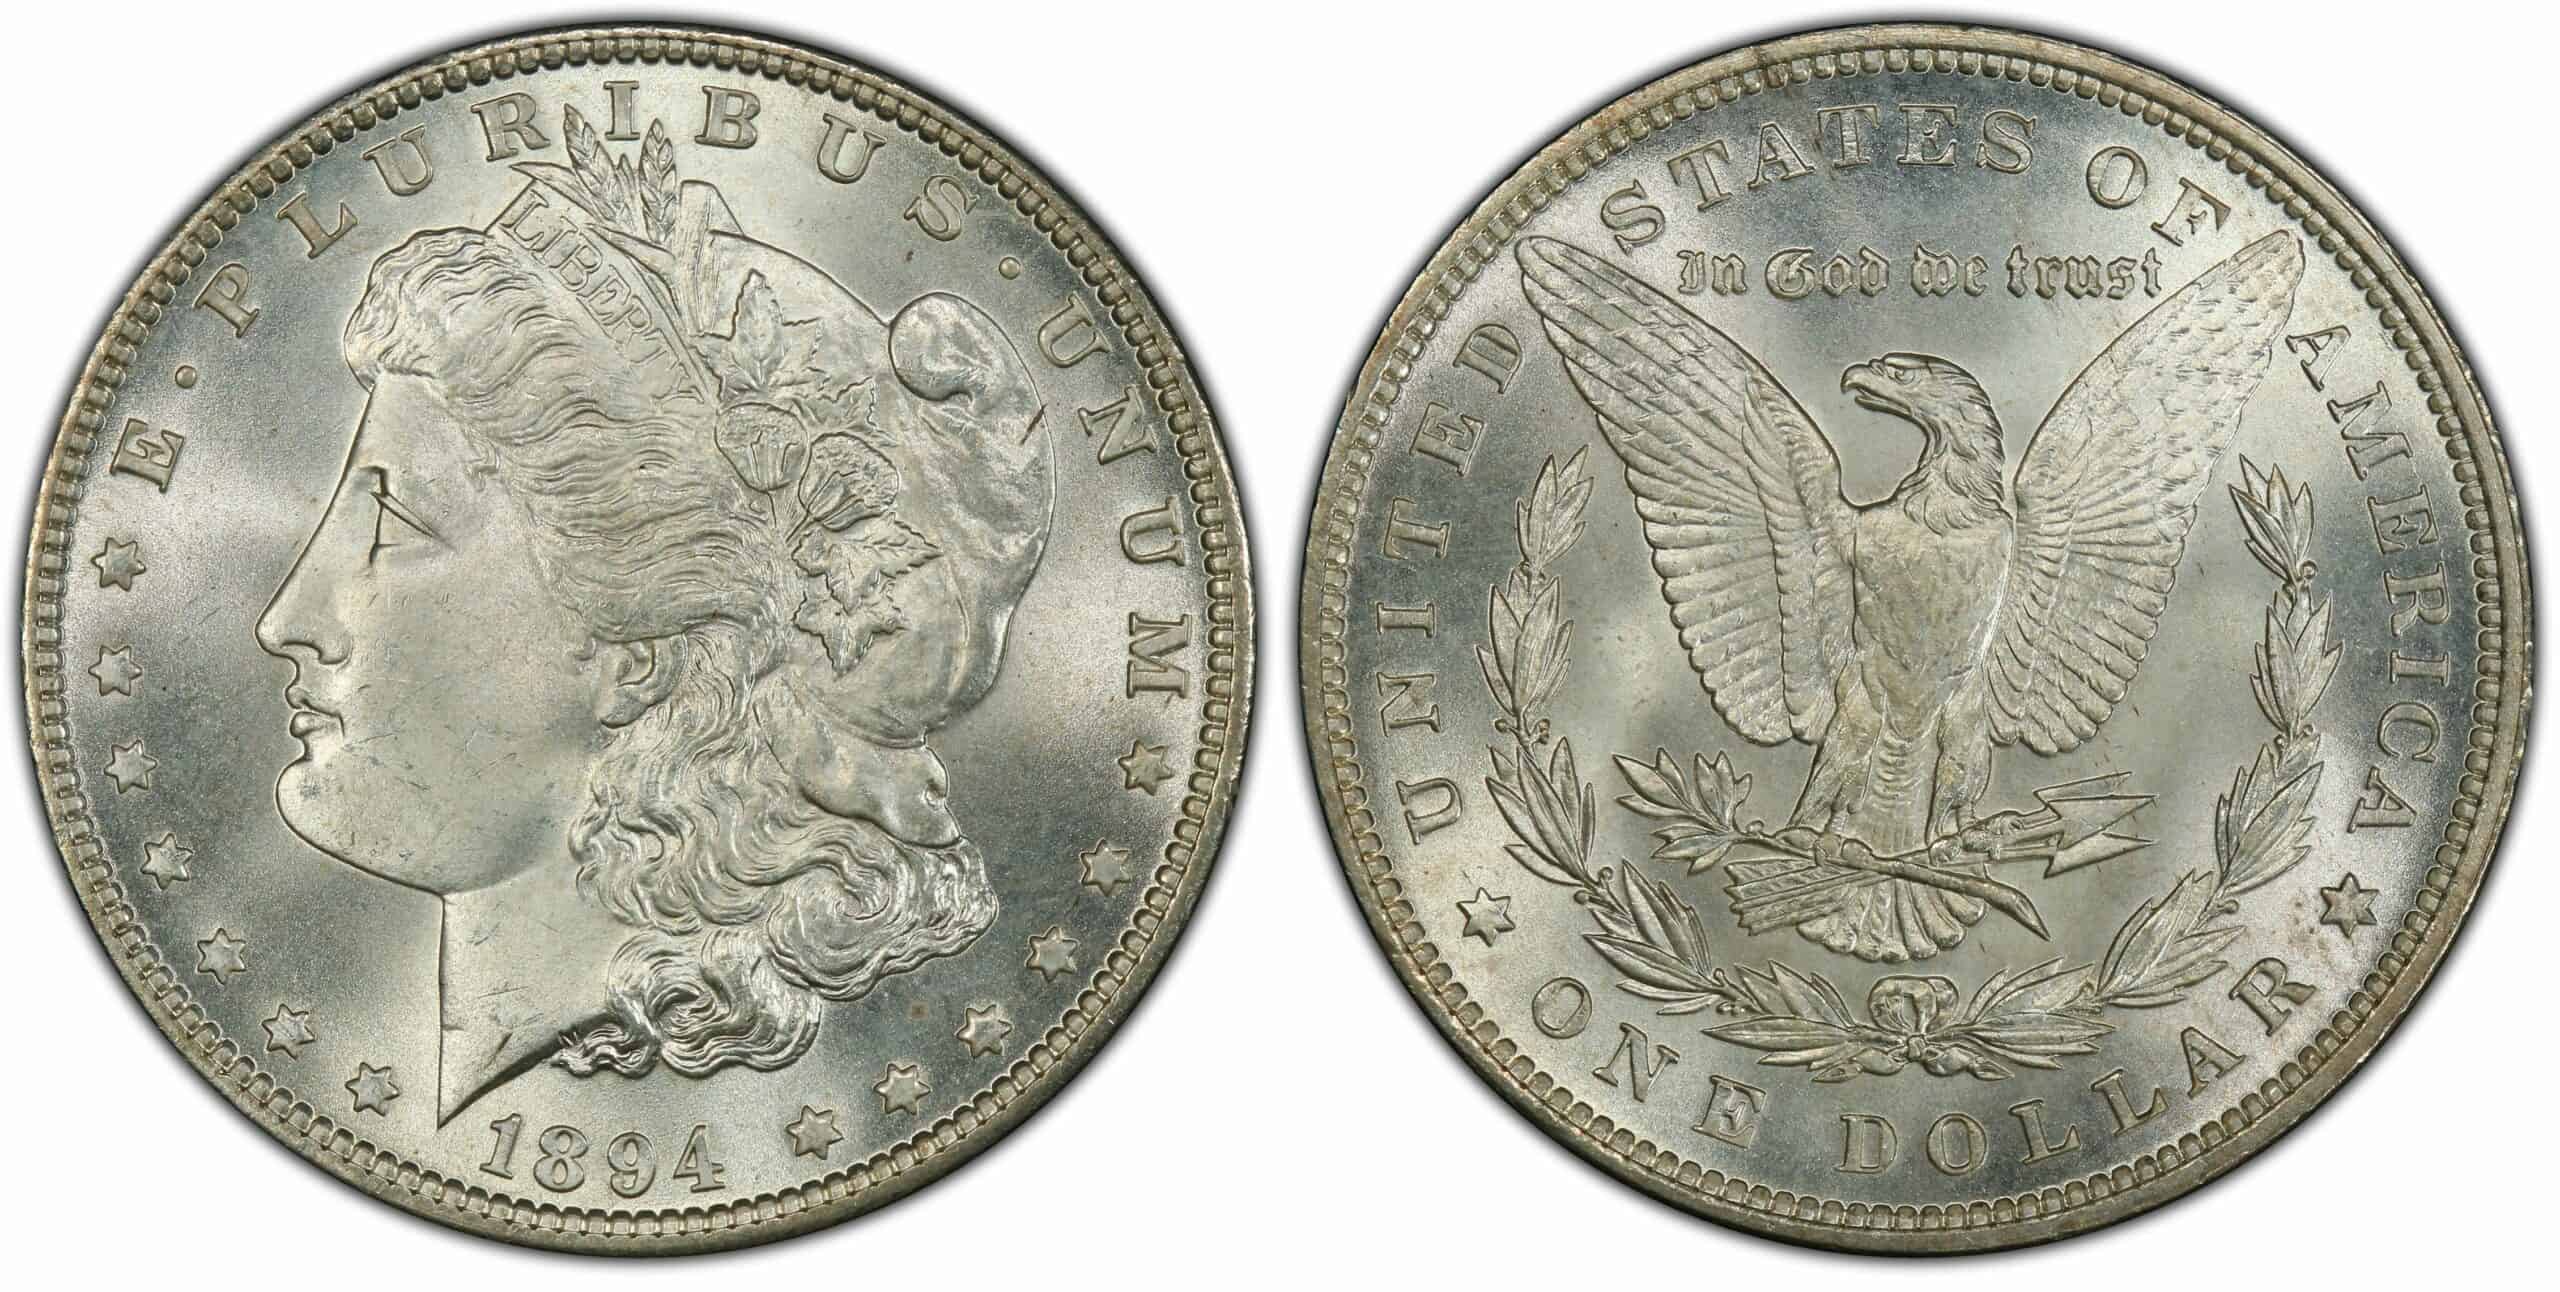 History of 1894 Morgan Silver Dollar